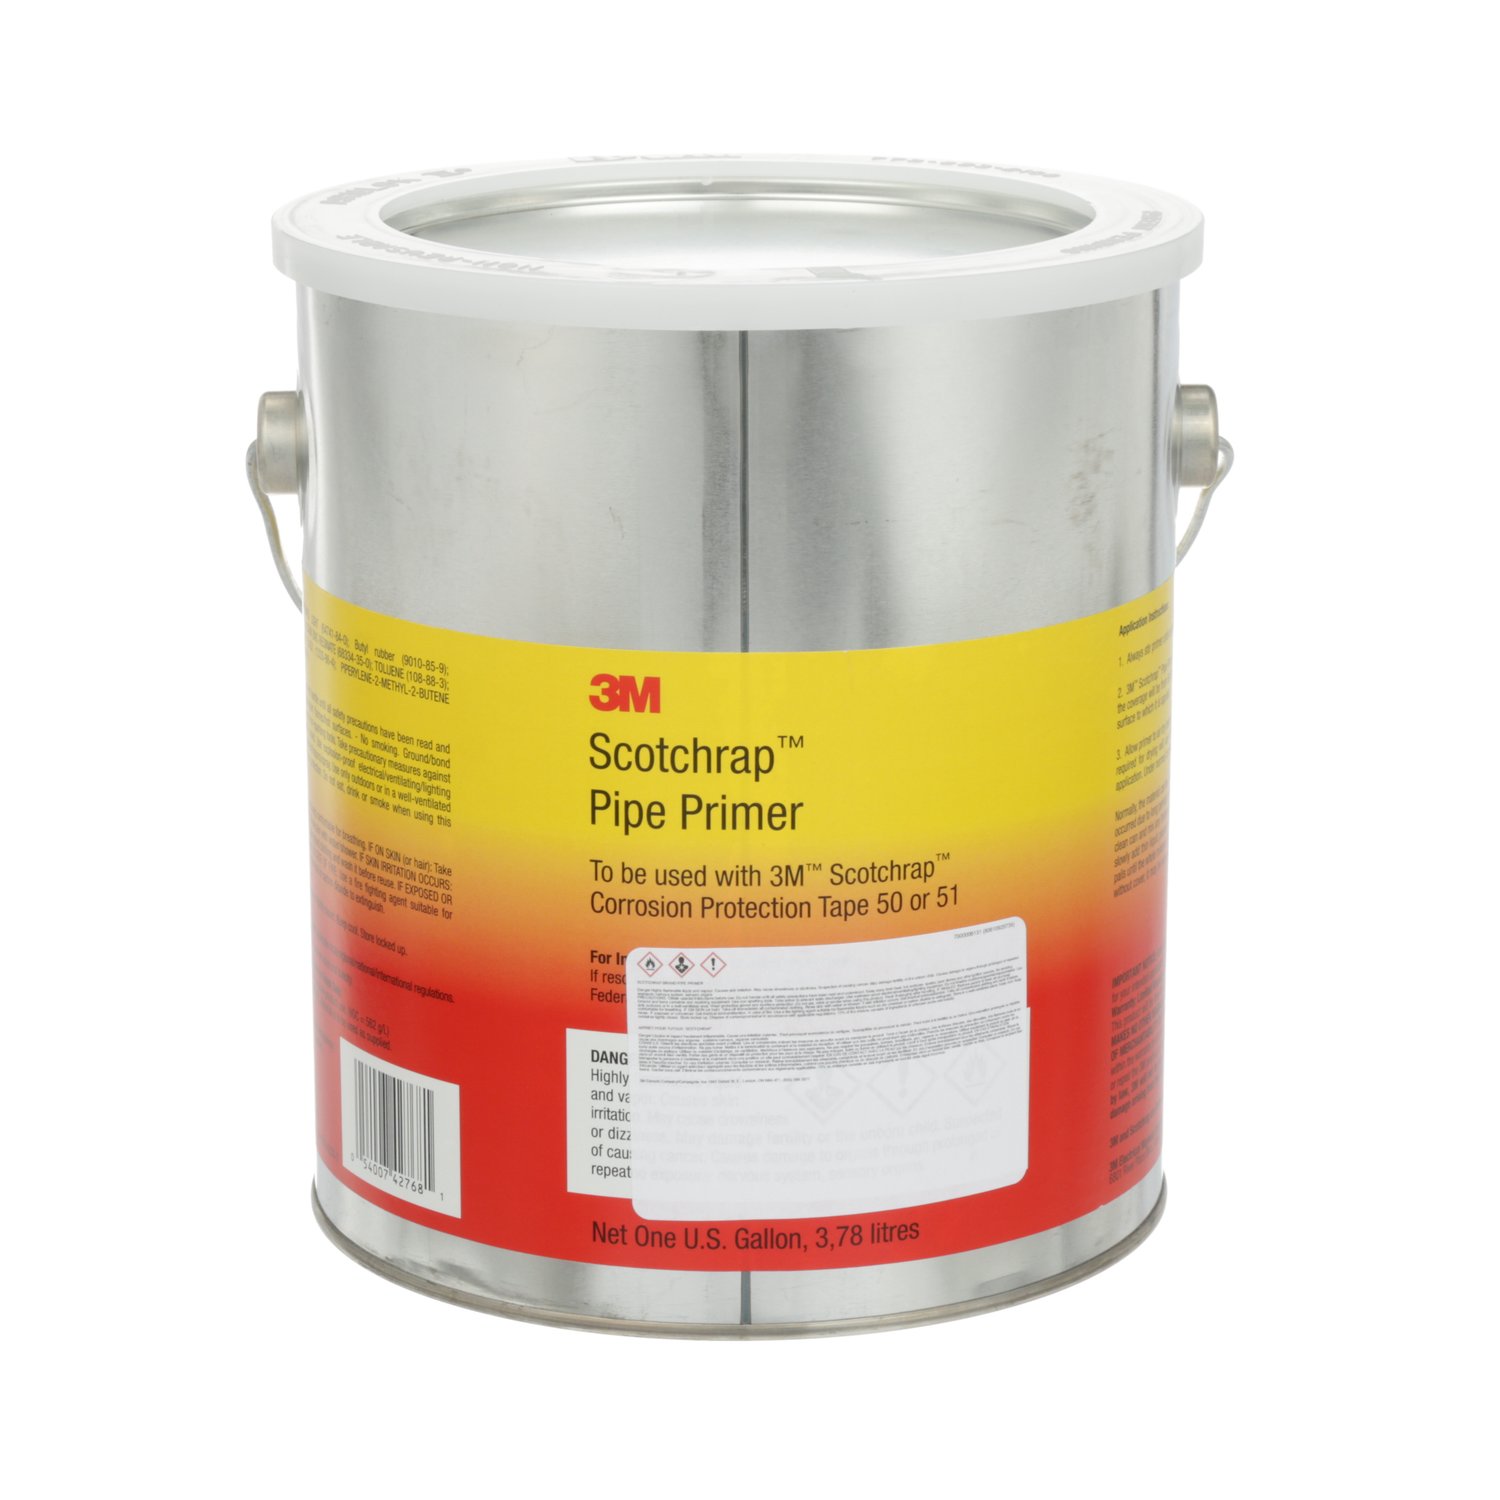 7000006131 - 3M Scotchrap Pipe Primer, 1 gallon can, 1 gallon/container, 4
gallons/case